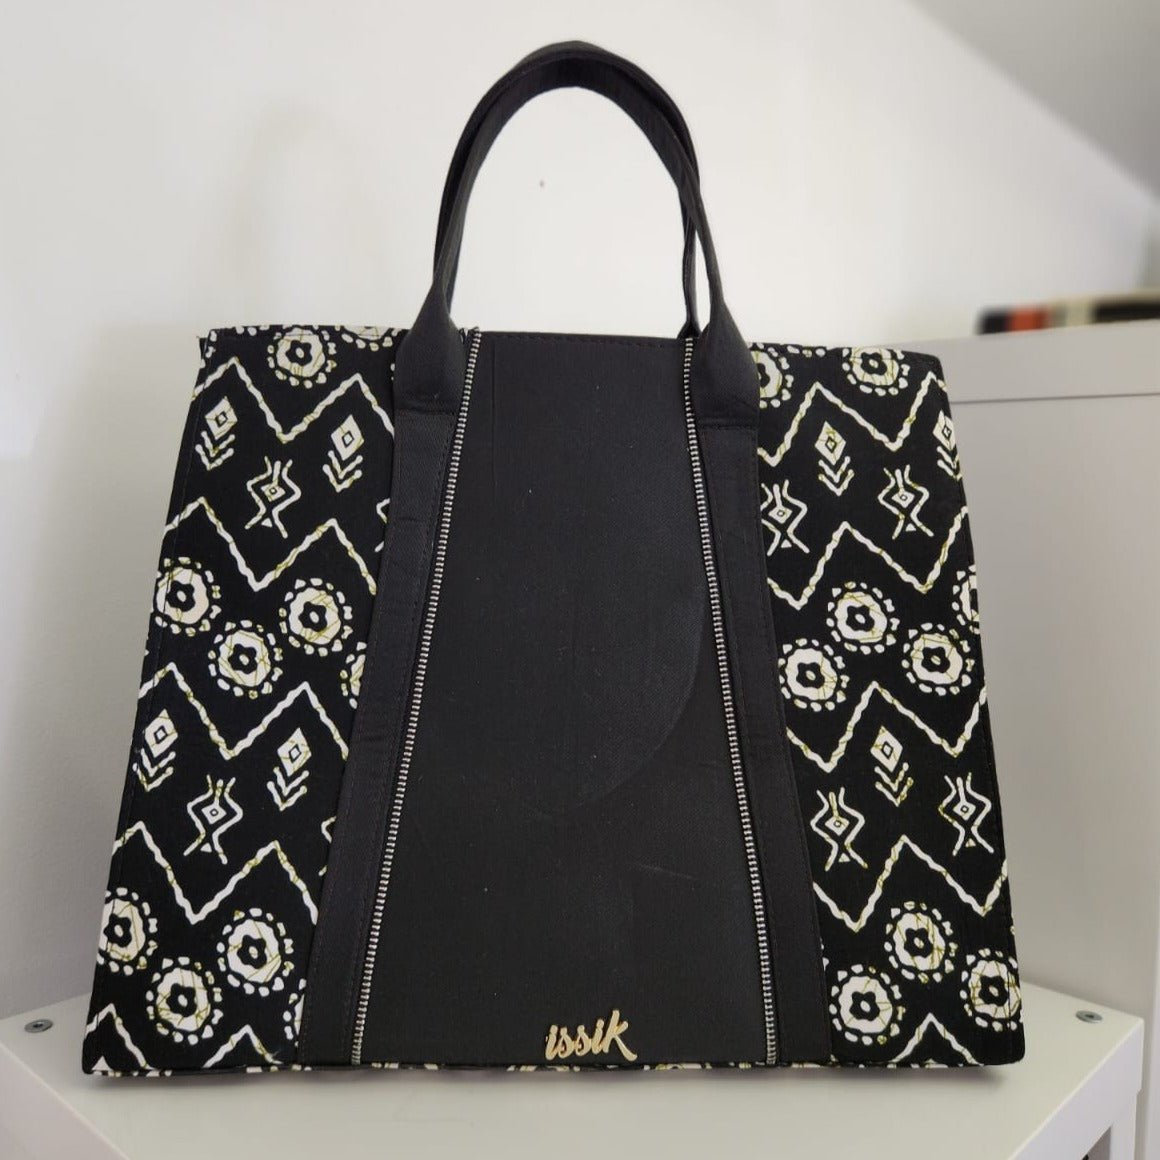 Black & White Shopping Handbag - House of Prints